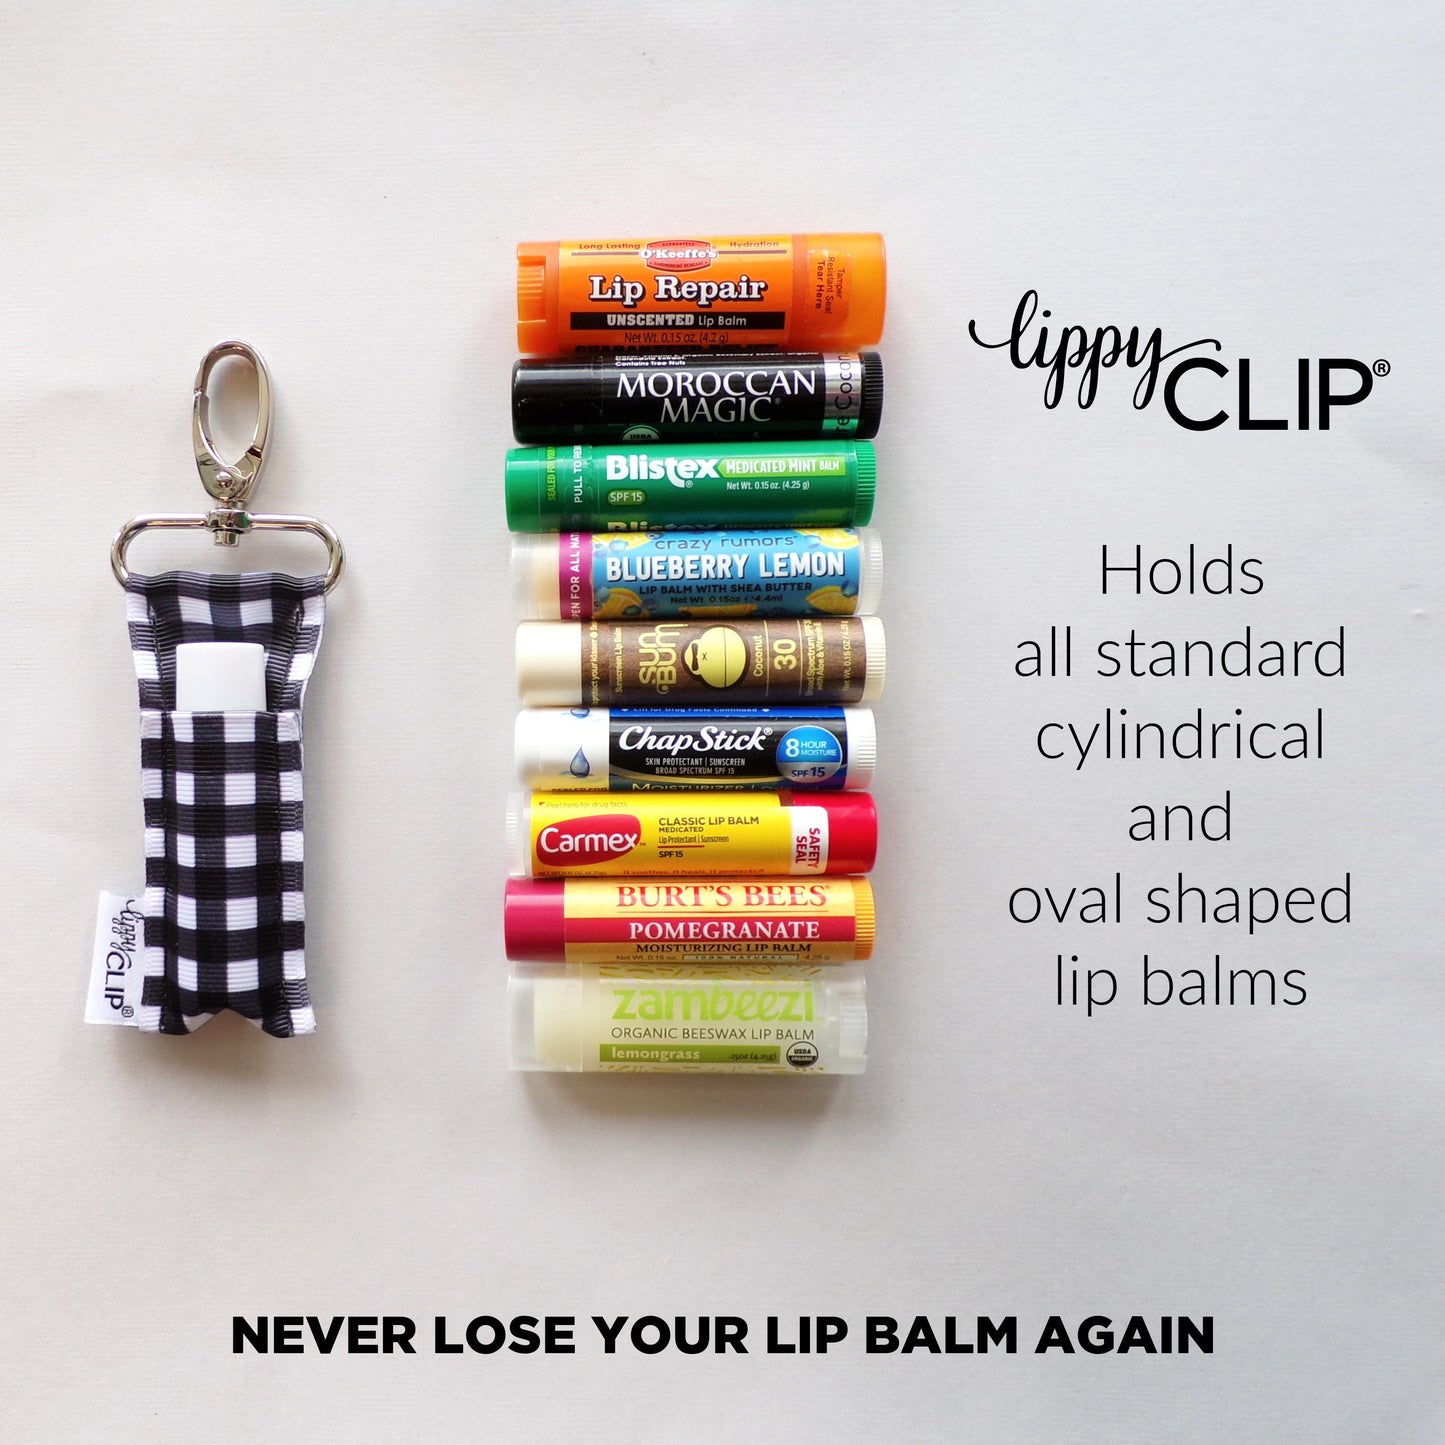 It's Christmas Time LippyClip® Lip Balm Holder